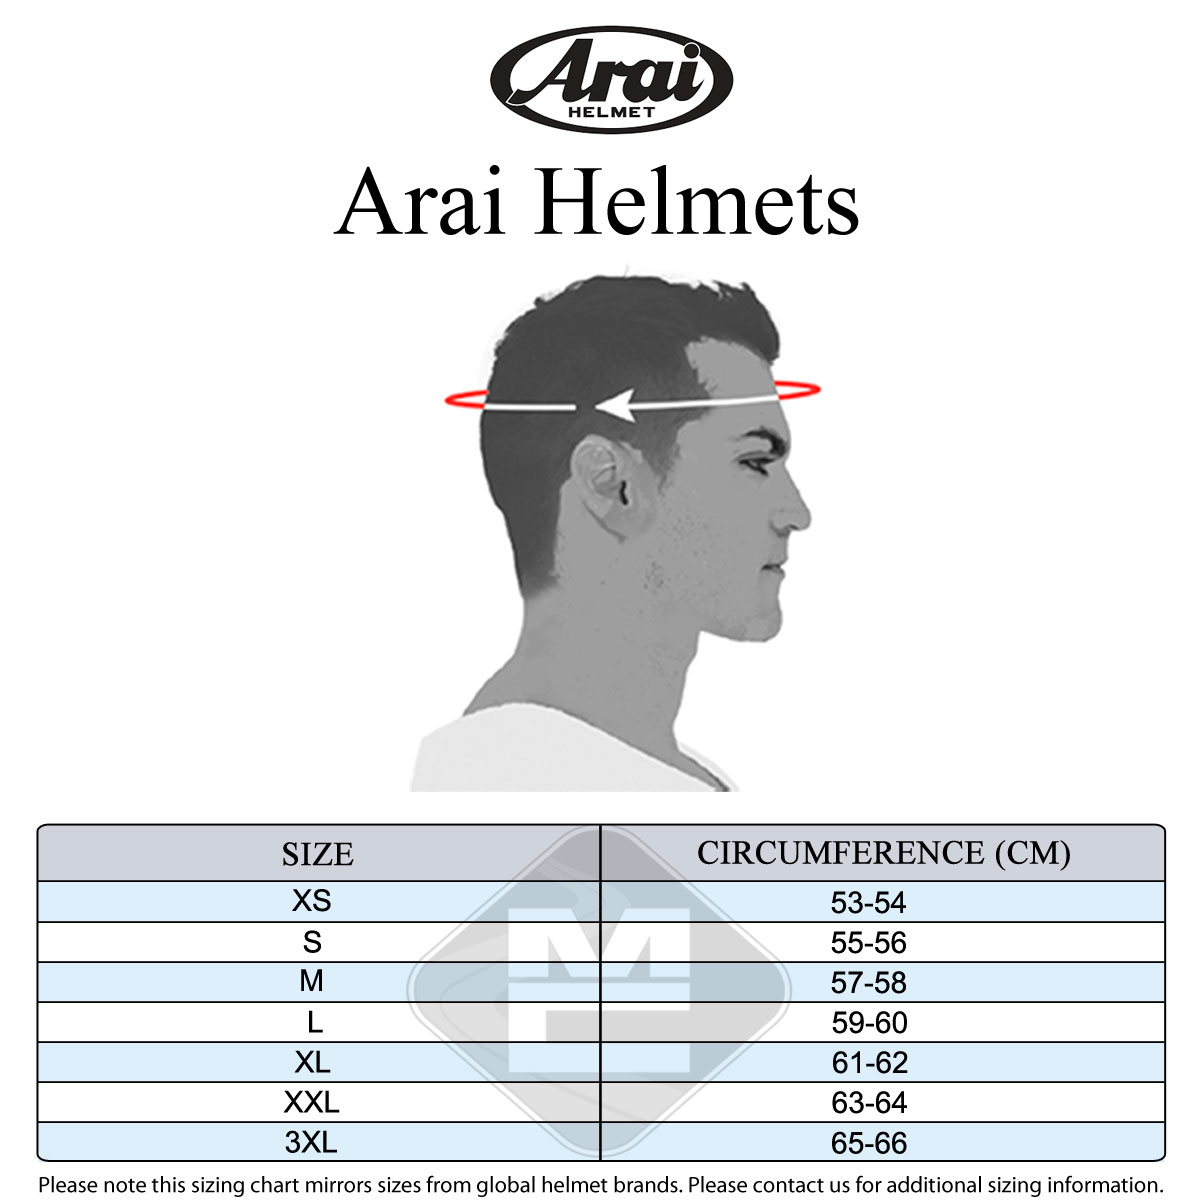 Arai Men's Size Guide